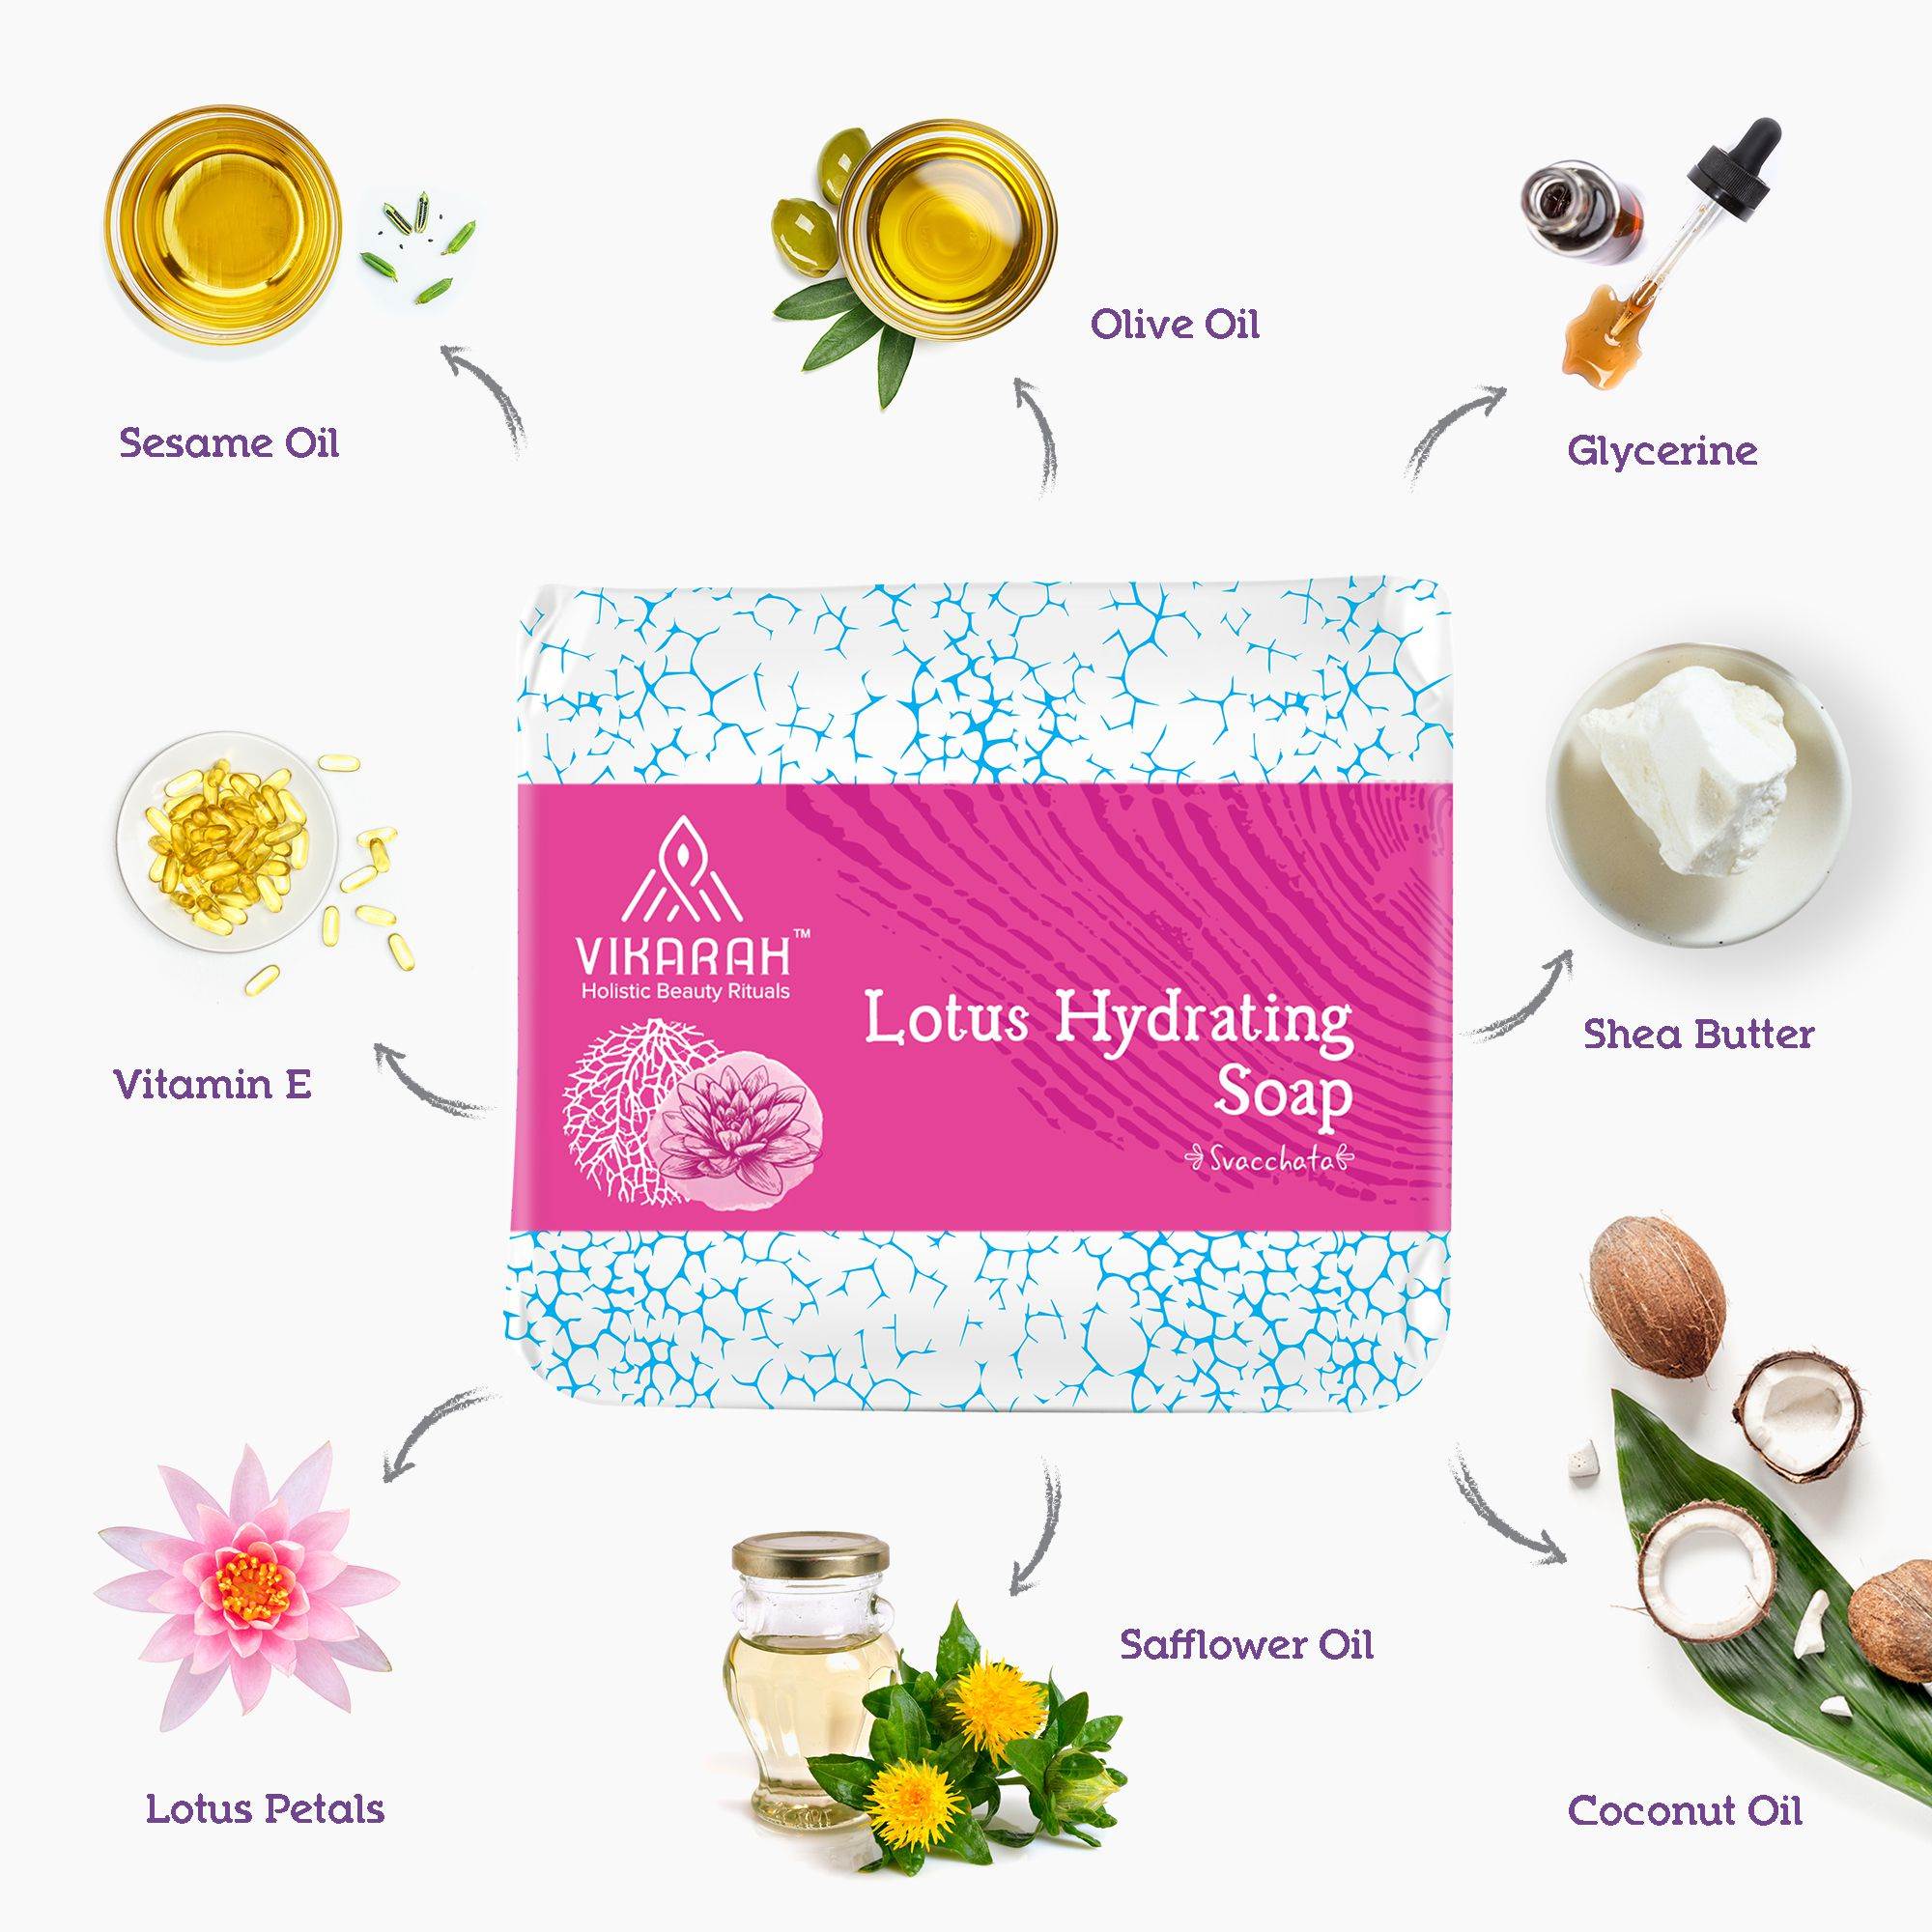 Lotus Hydrating Soap